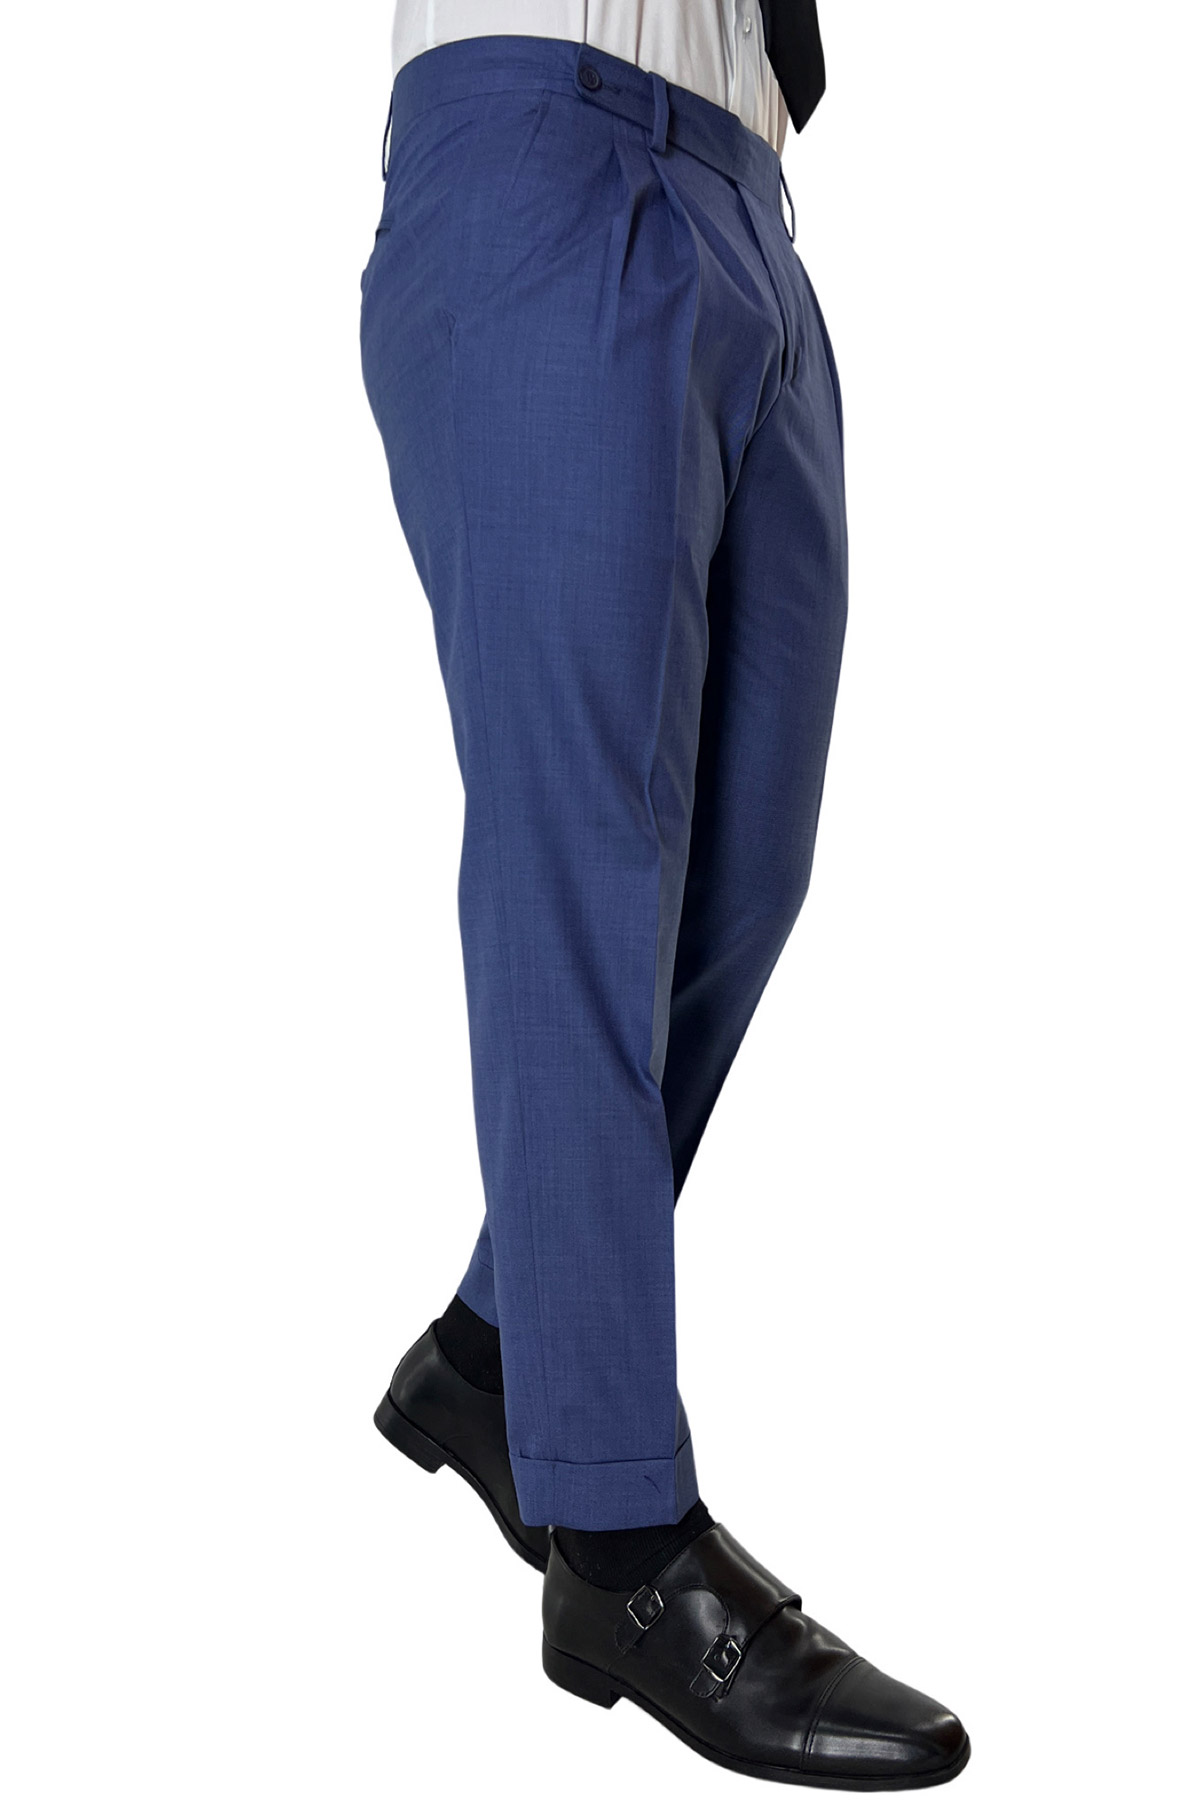 Pantalone uomo color denim chiusura prolungata doppia pinces in fresco lana super 140's Holland & Sherry